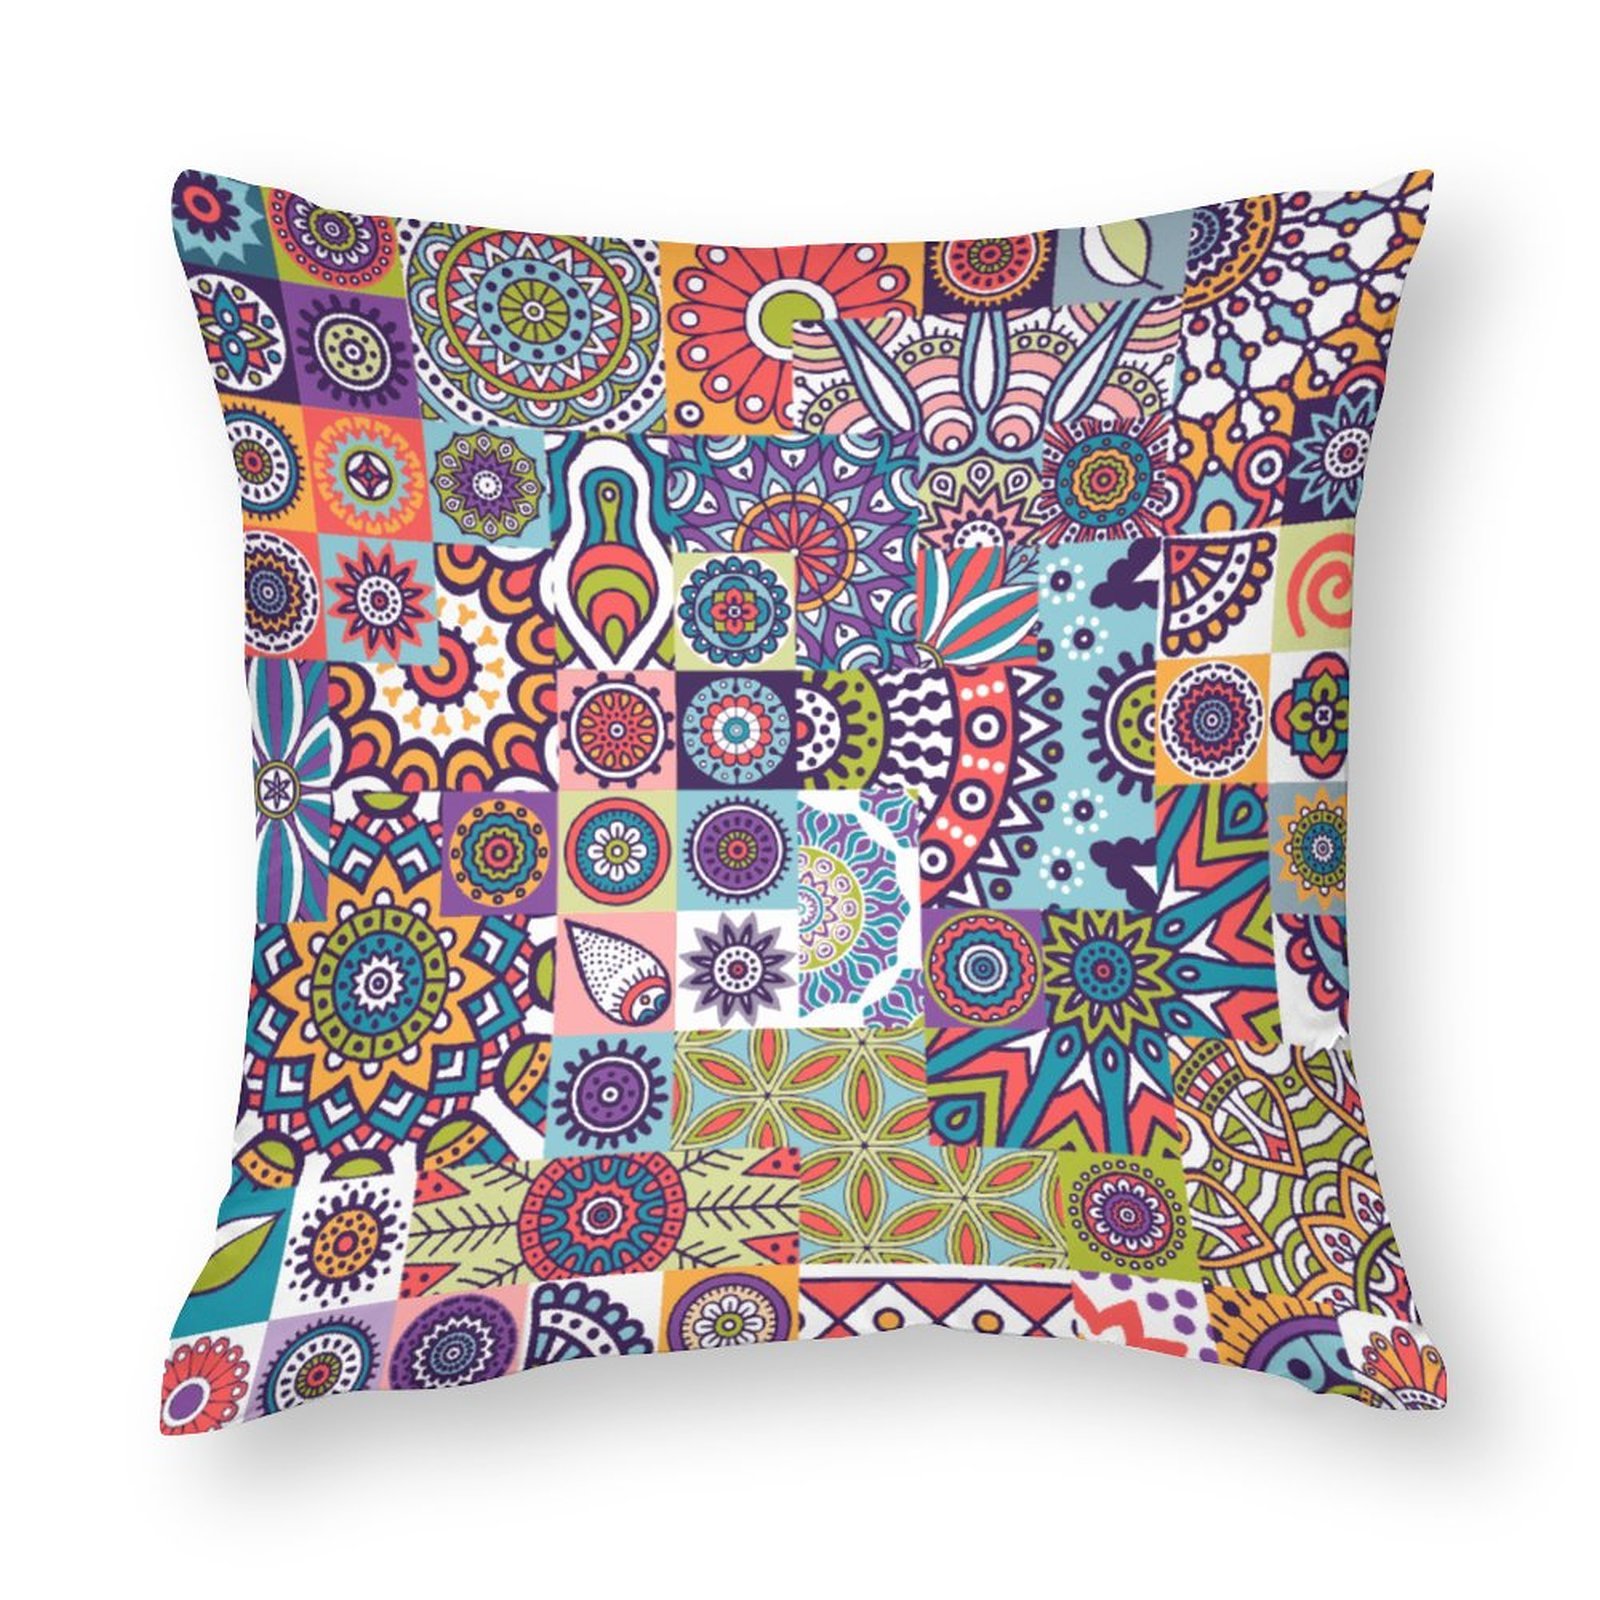 Mondxflaur Mandala Pillow Case Covers for Sofas Couches Polyester Decorative - $10.99 - $13.99